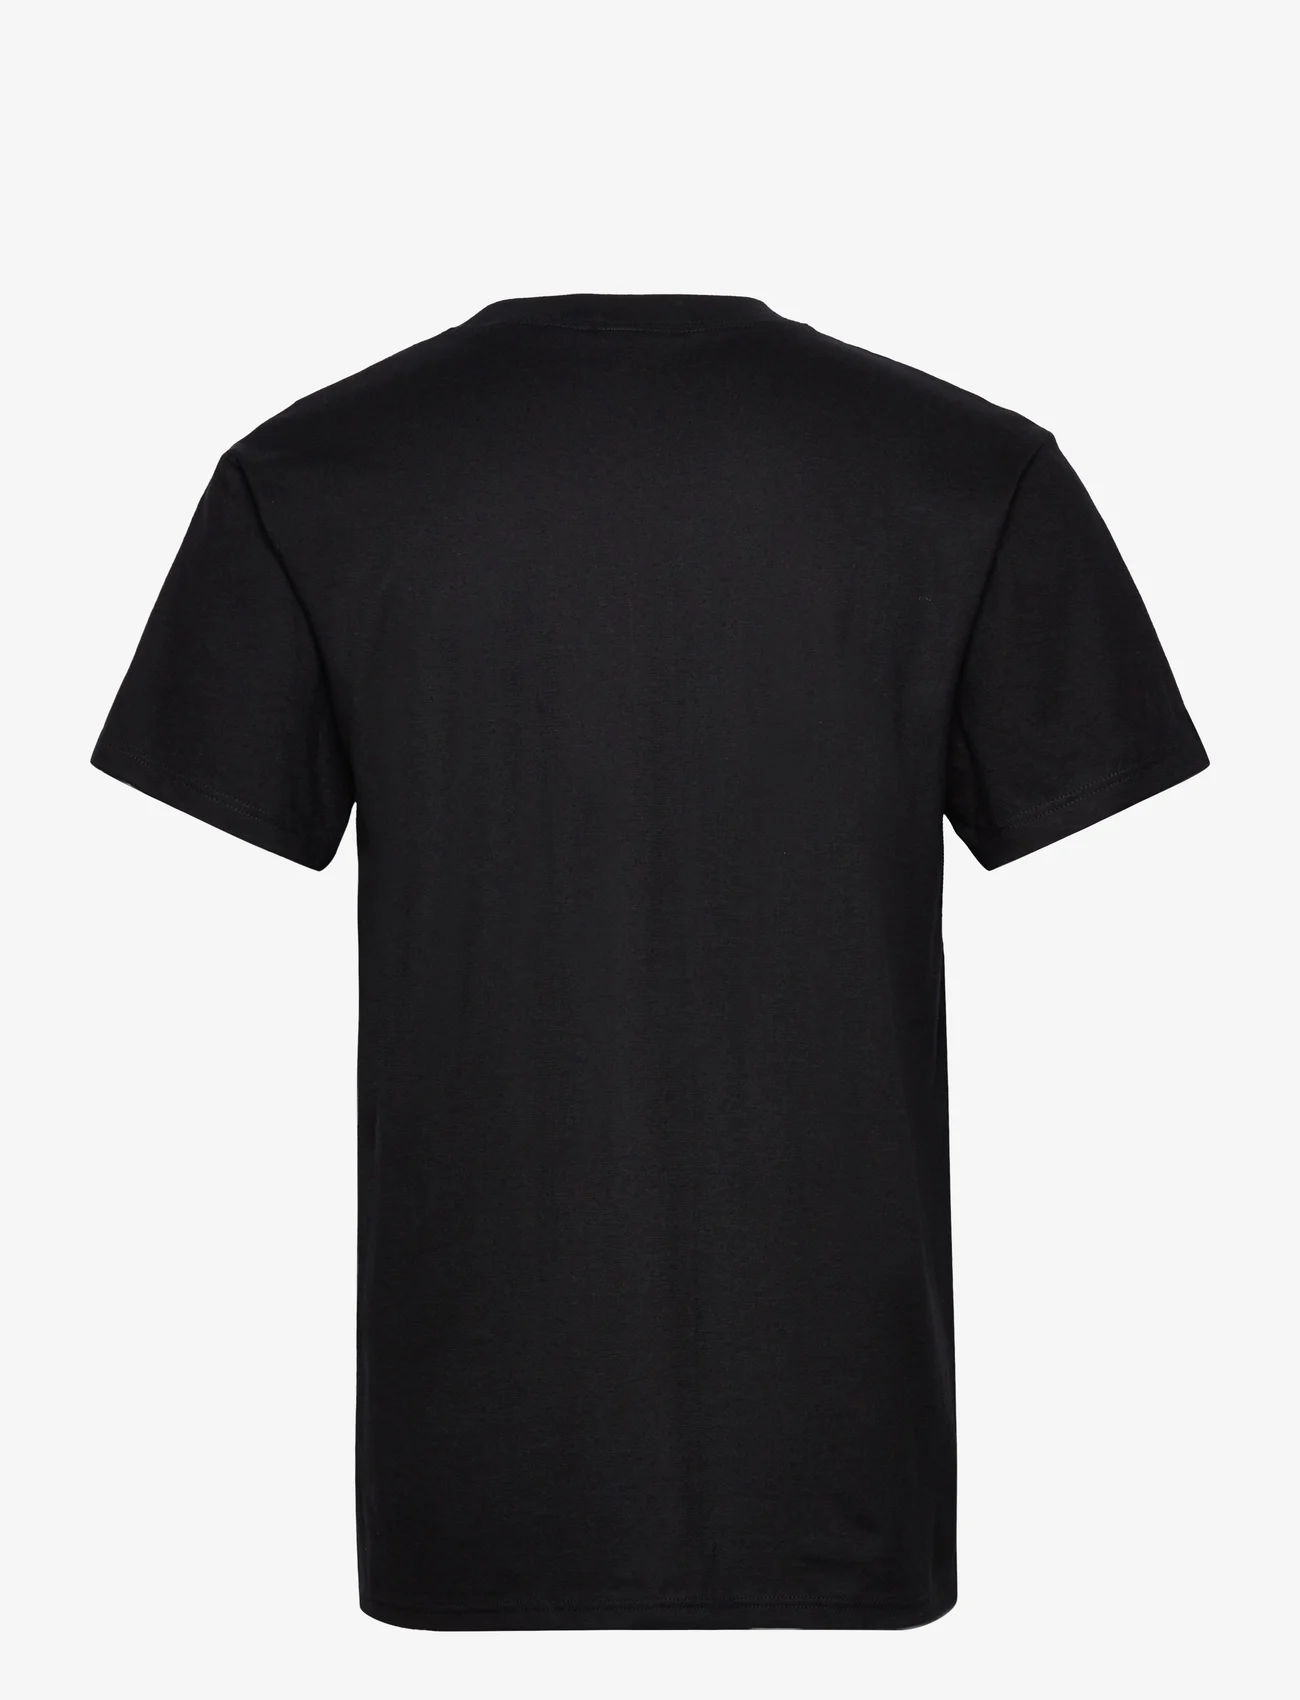 Dovre - Dovre T-shirts 1/4 ærme organi - zemākās cenas - black - 1